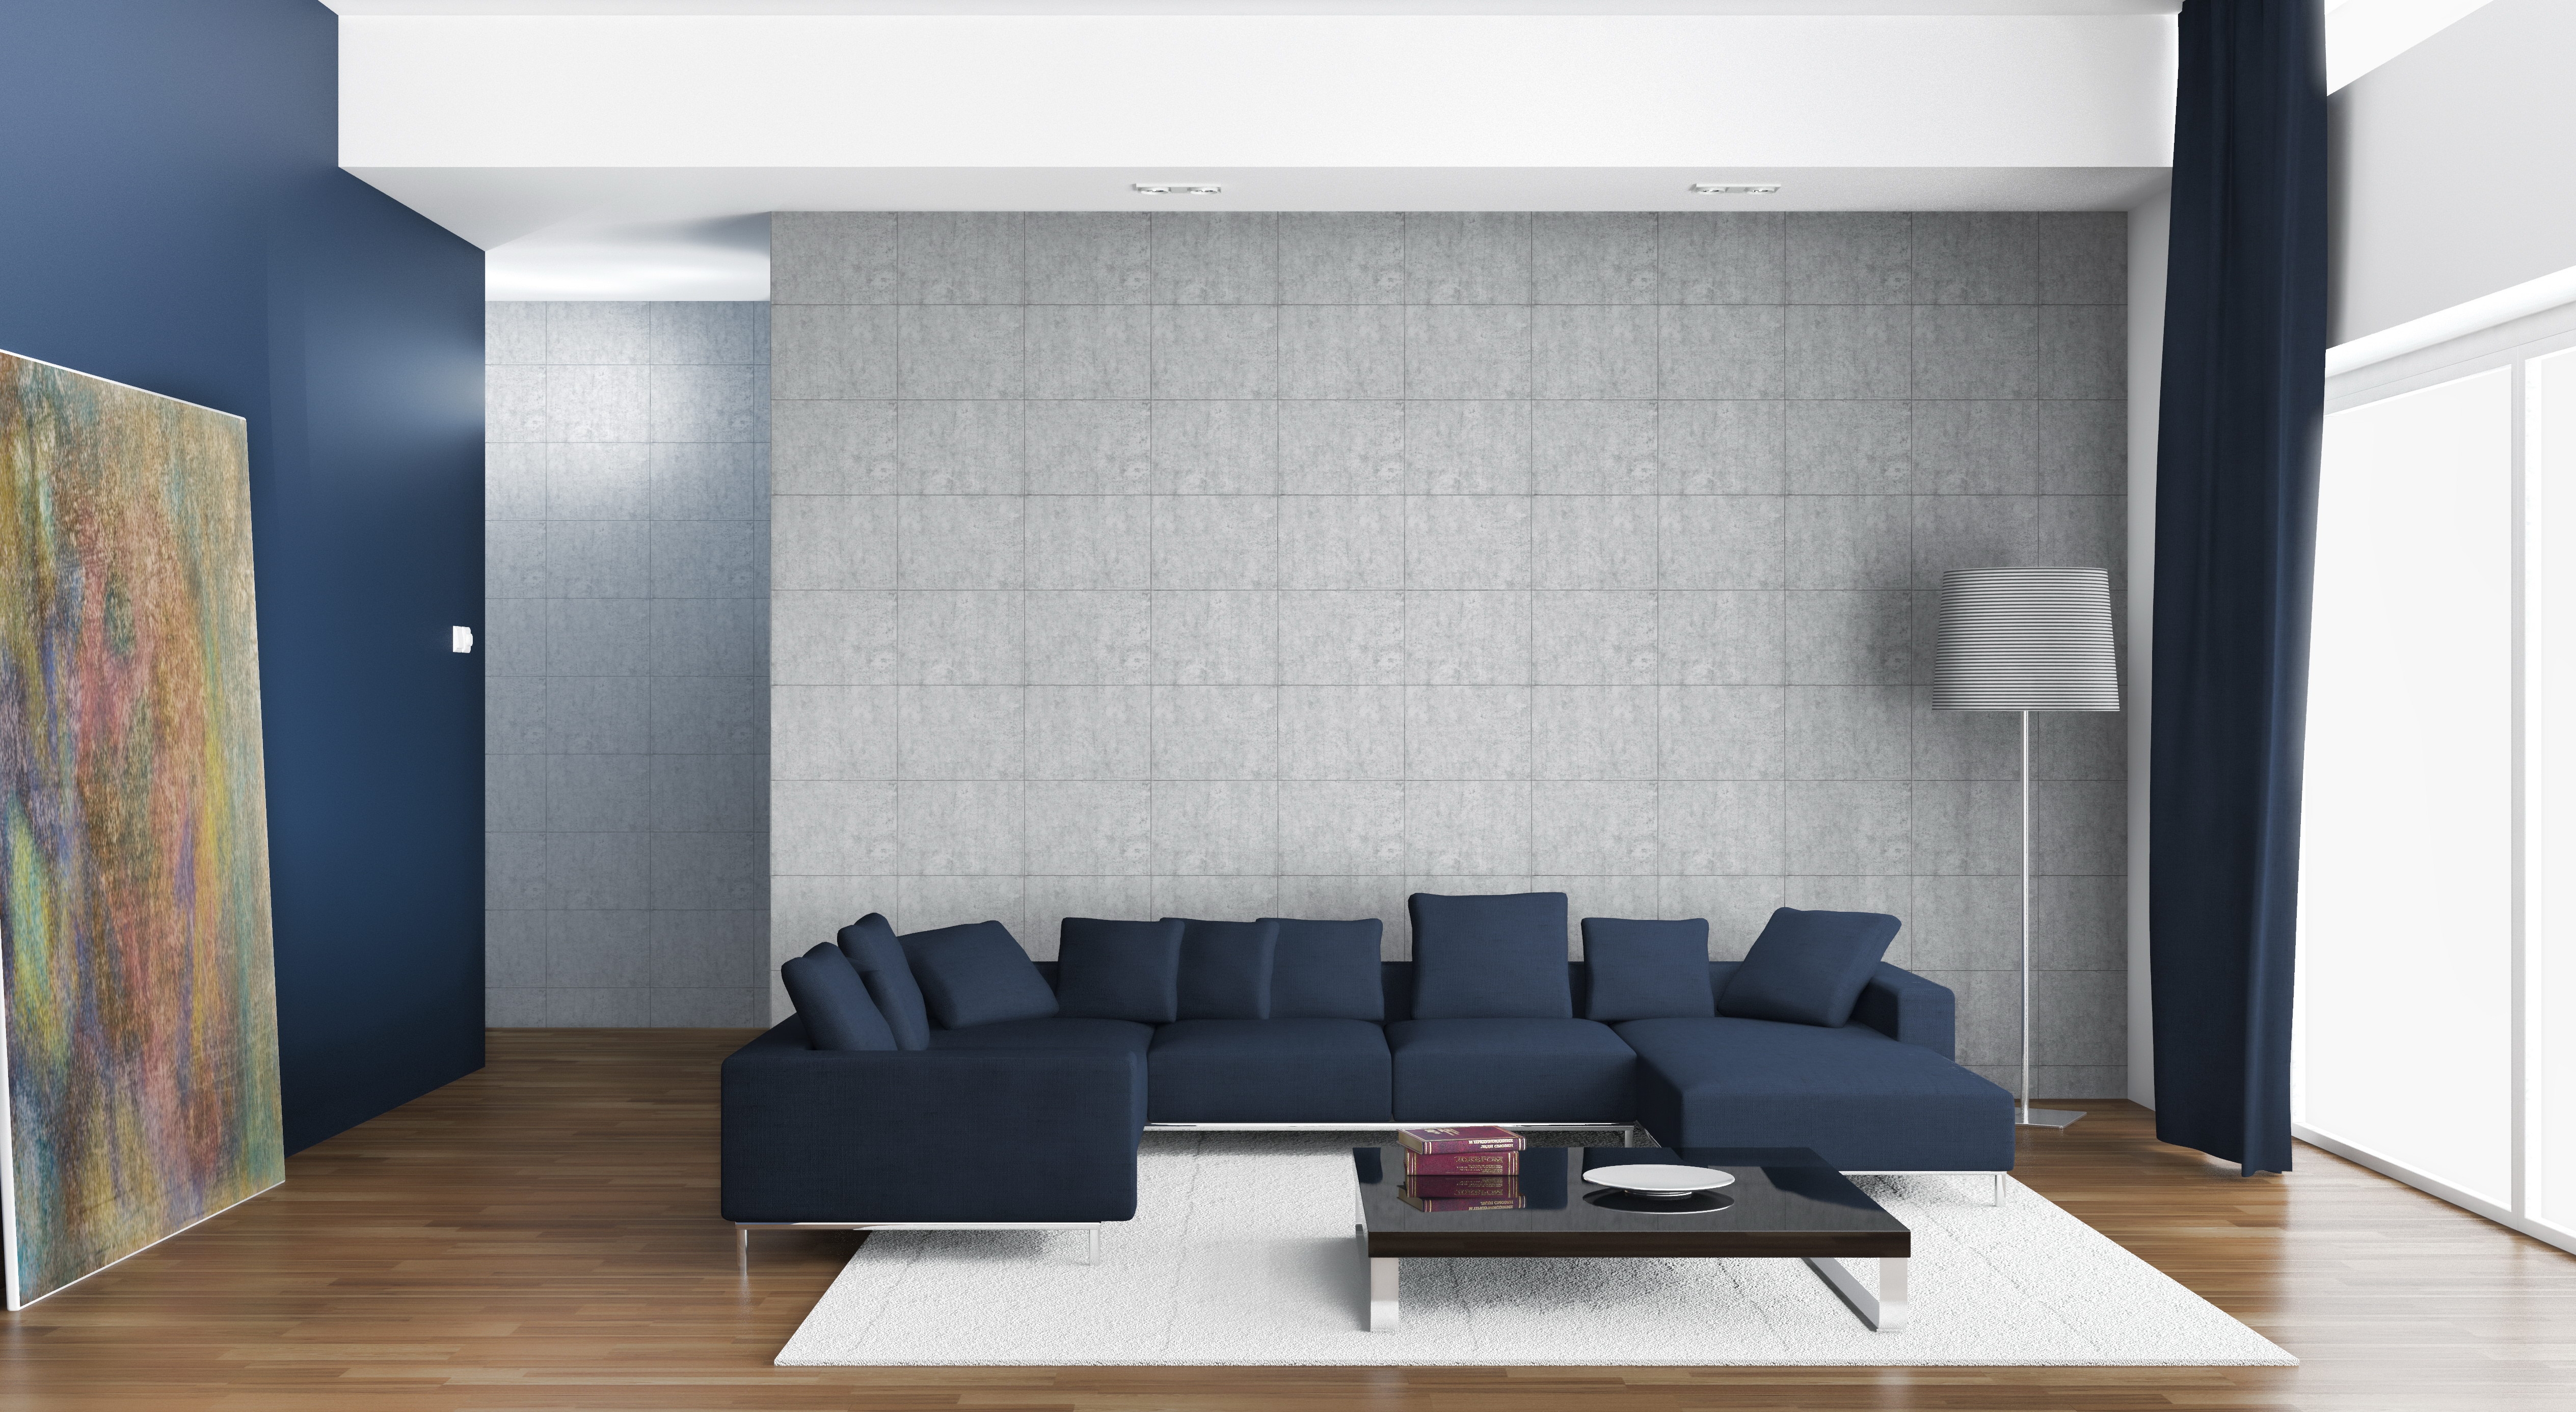 graphics, furniture, miscellanea, miscellaneous, design, living room